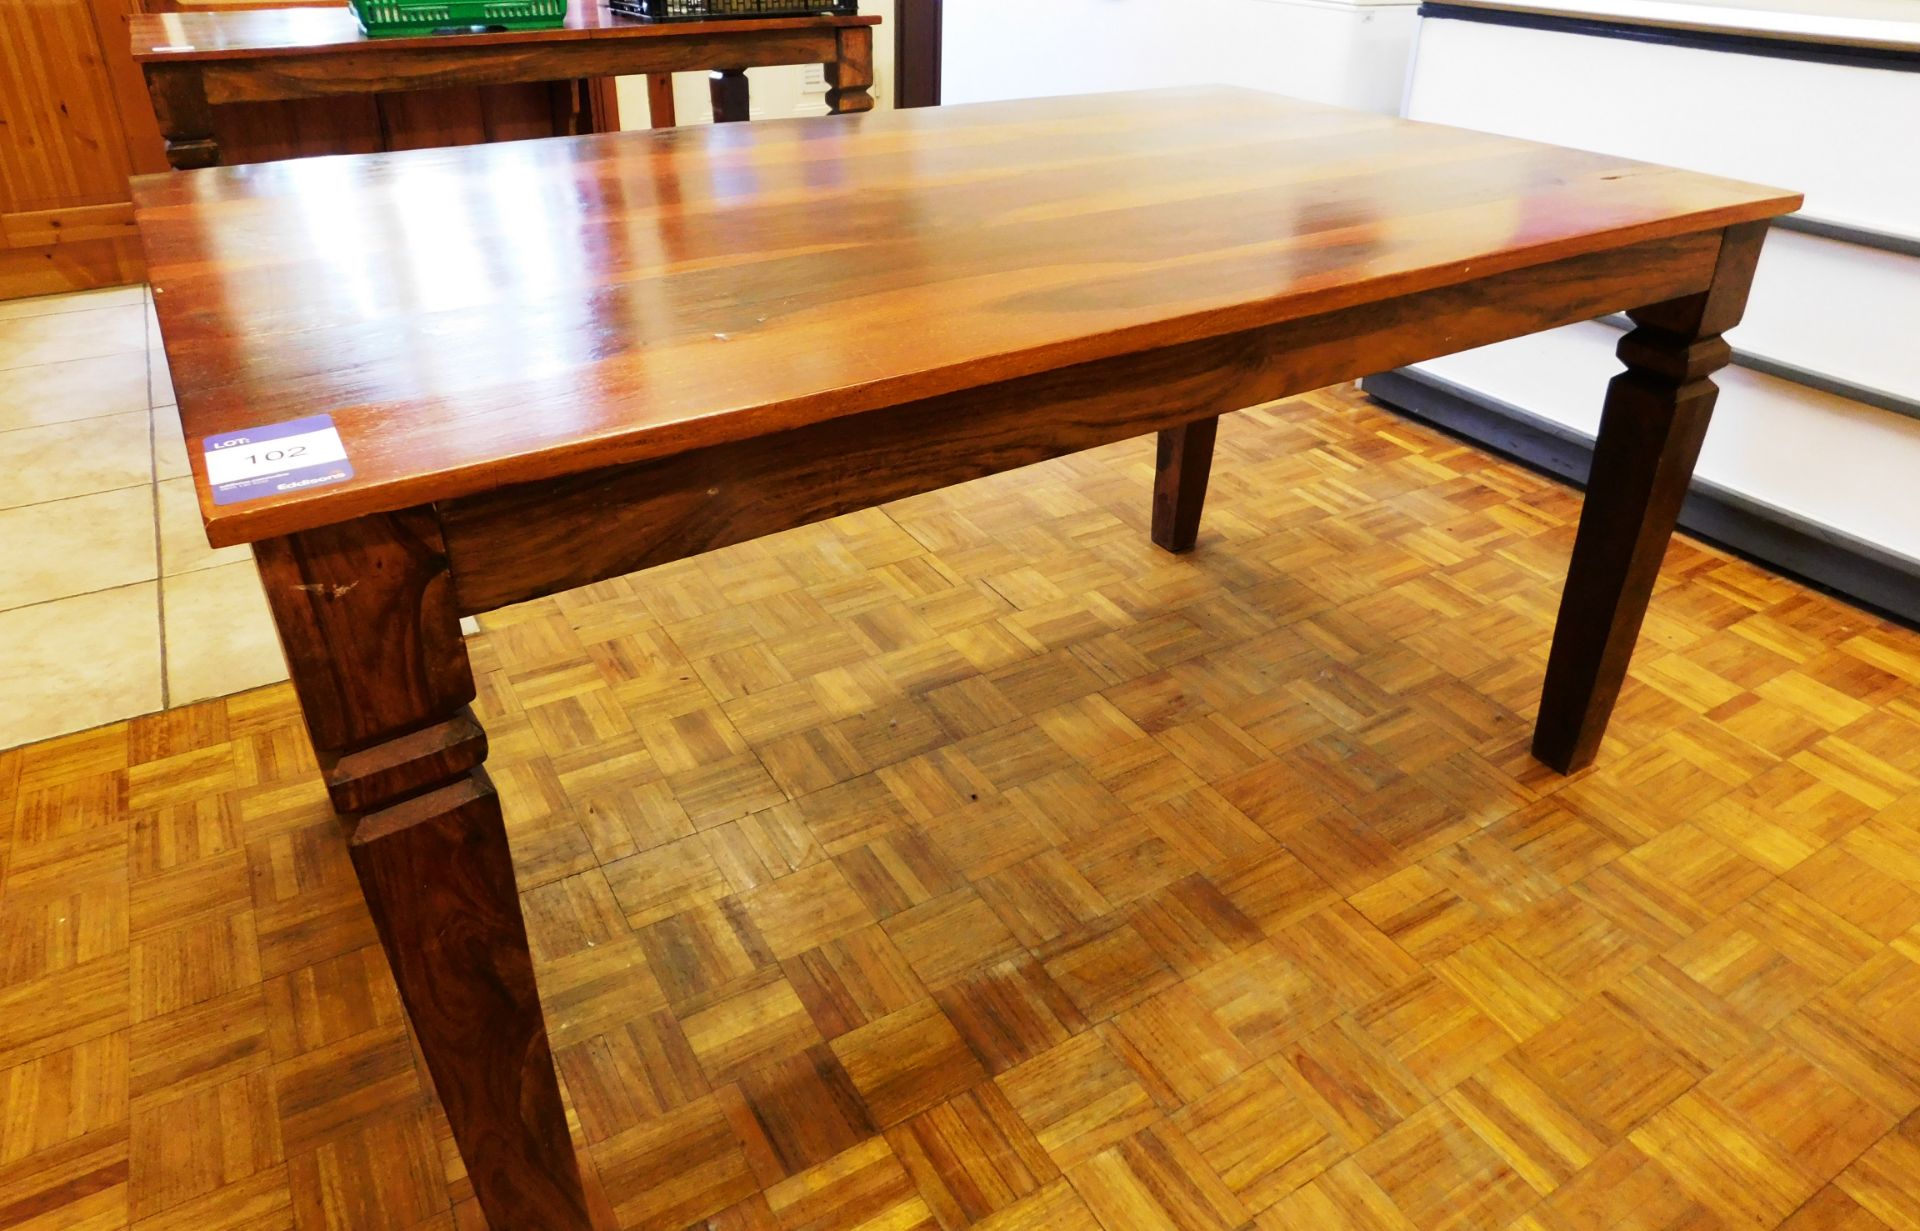 Oak effect Kitchen Table, 5ft x 3ft